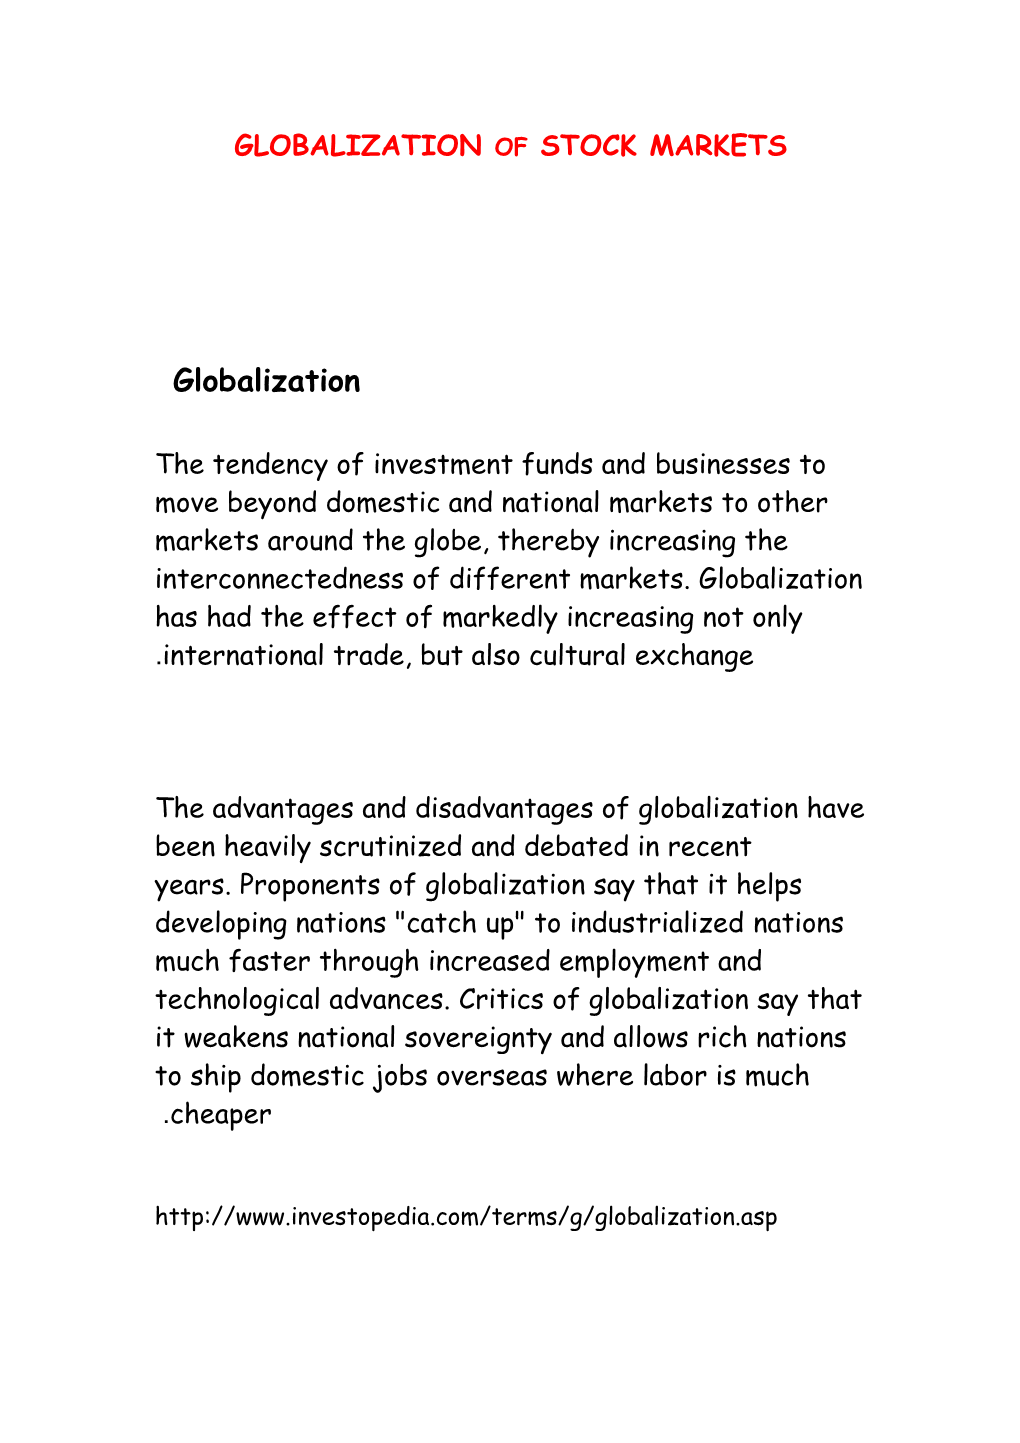 Globalization of Stock Markets